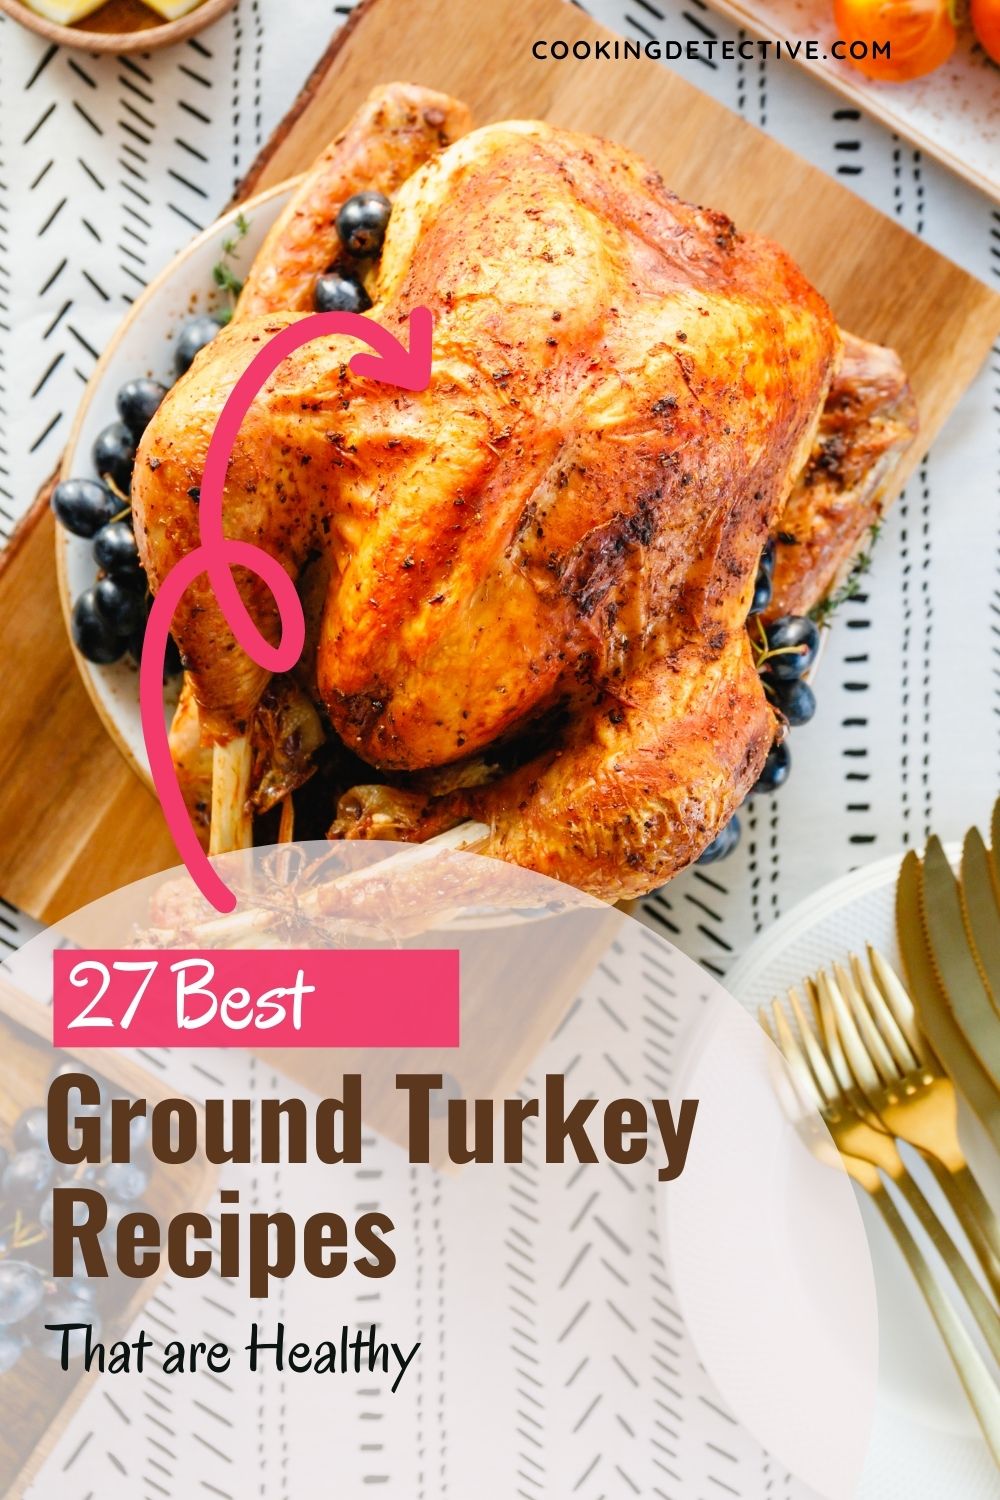  Ground Turkey Recipes